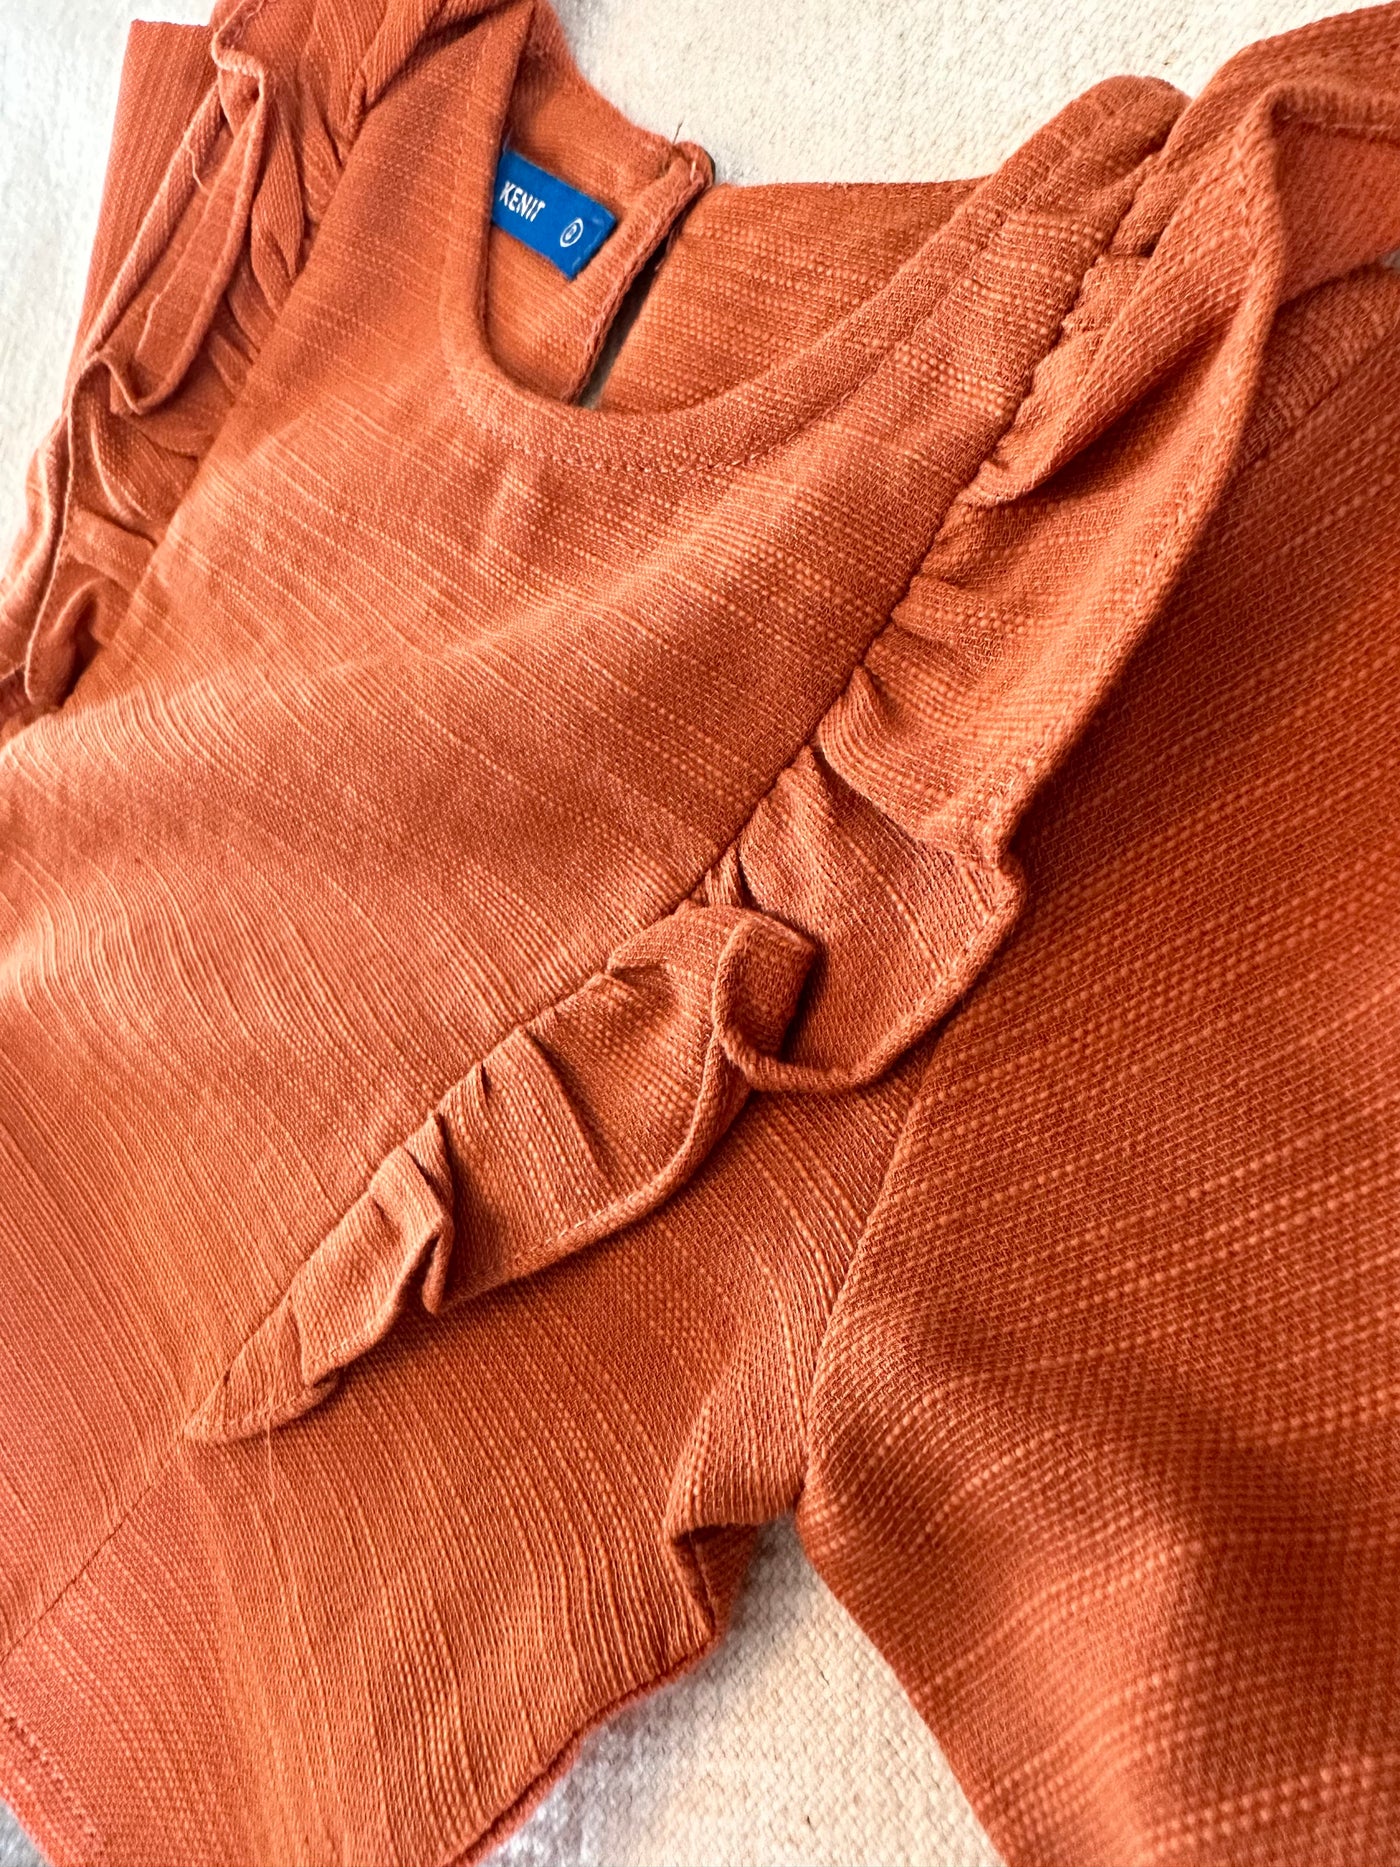 RIANG Frill Blouse & Skirt Set in Cinnamon Lush